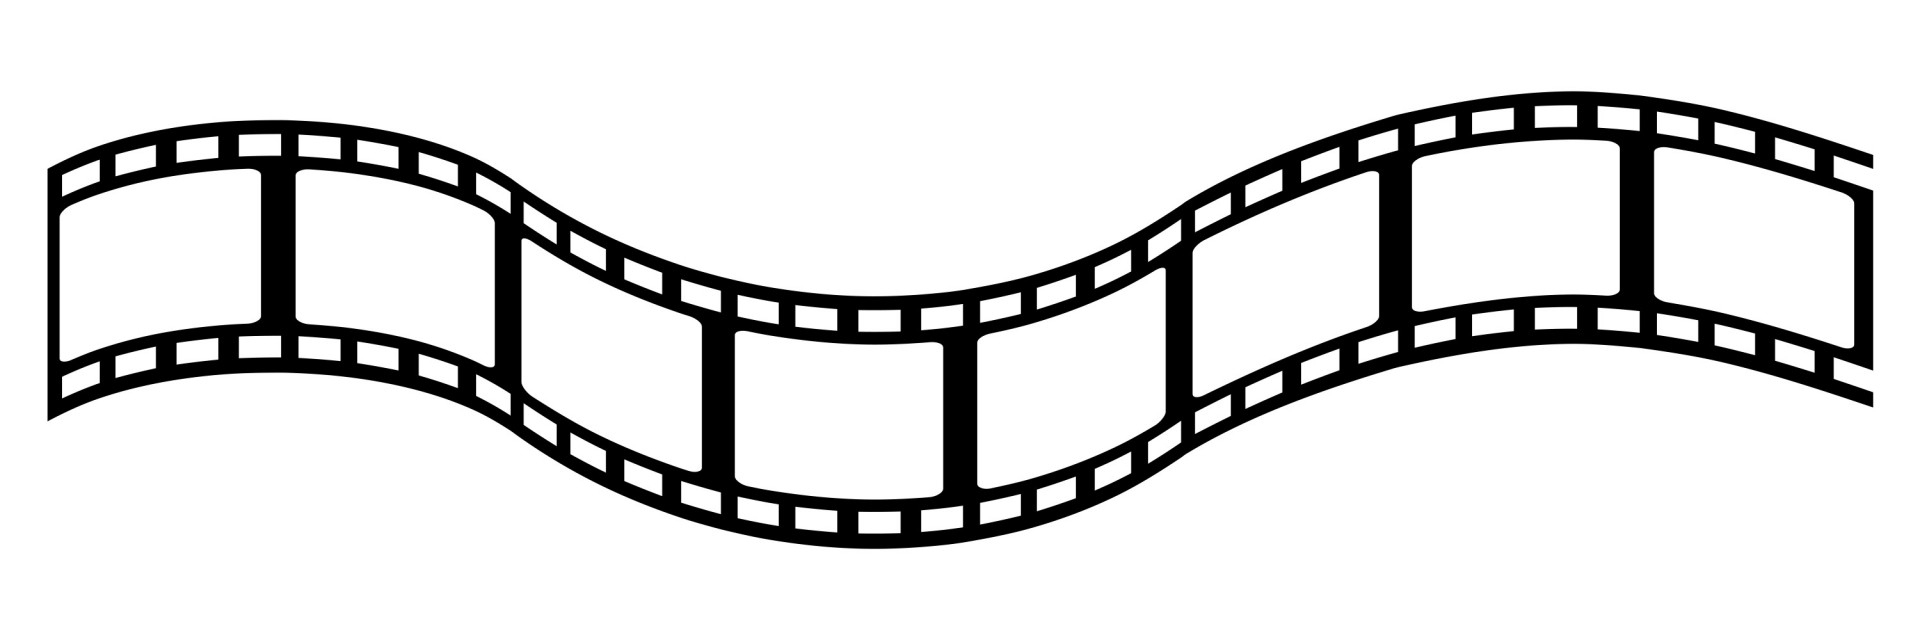 Film Roll Clipart